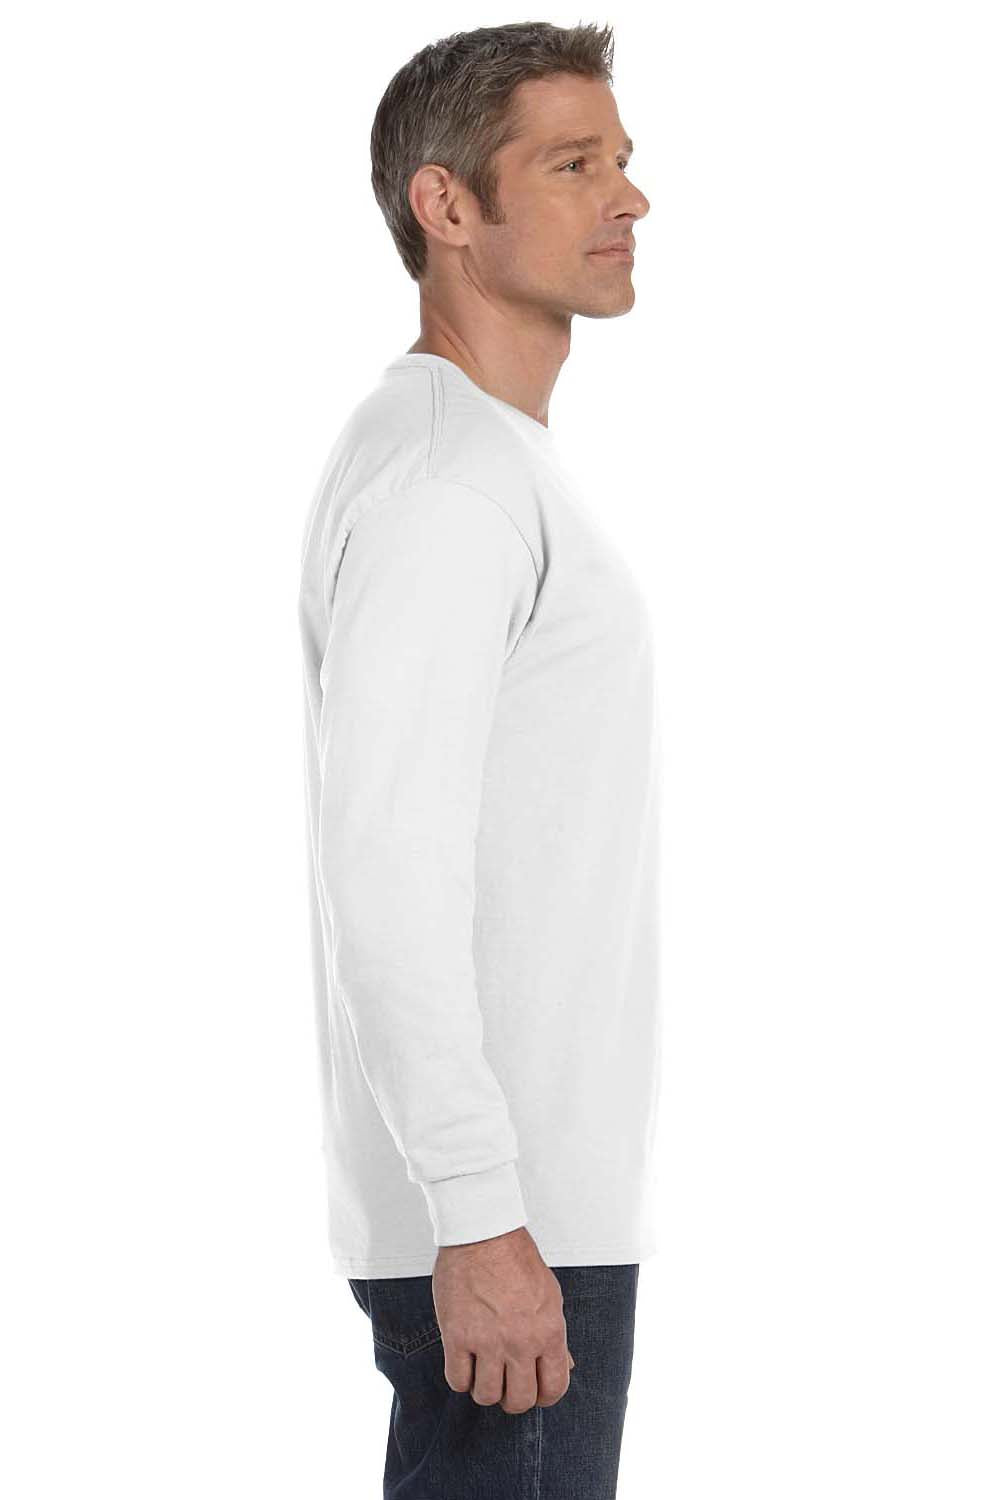 Jerzees 29L Mens Dri-Power Moisture Wicking Long Sleeve Crewneck T-Shirt White Side